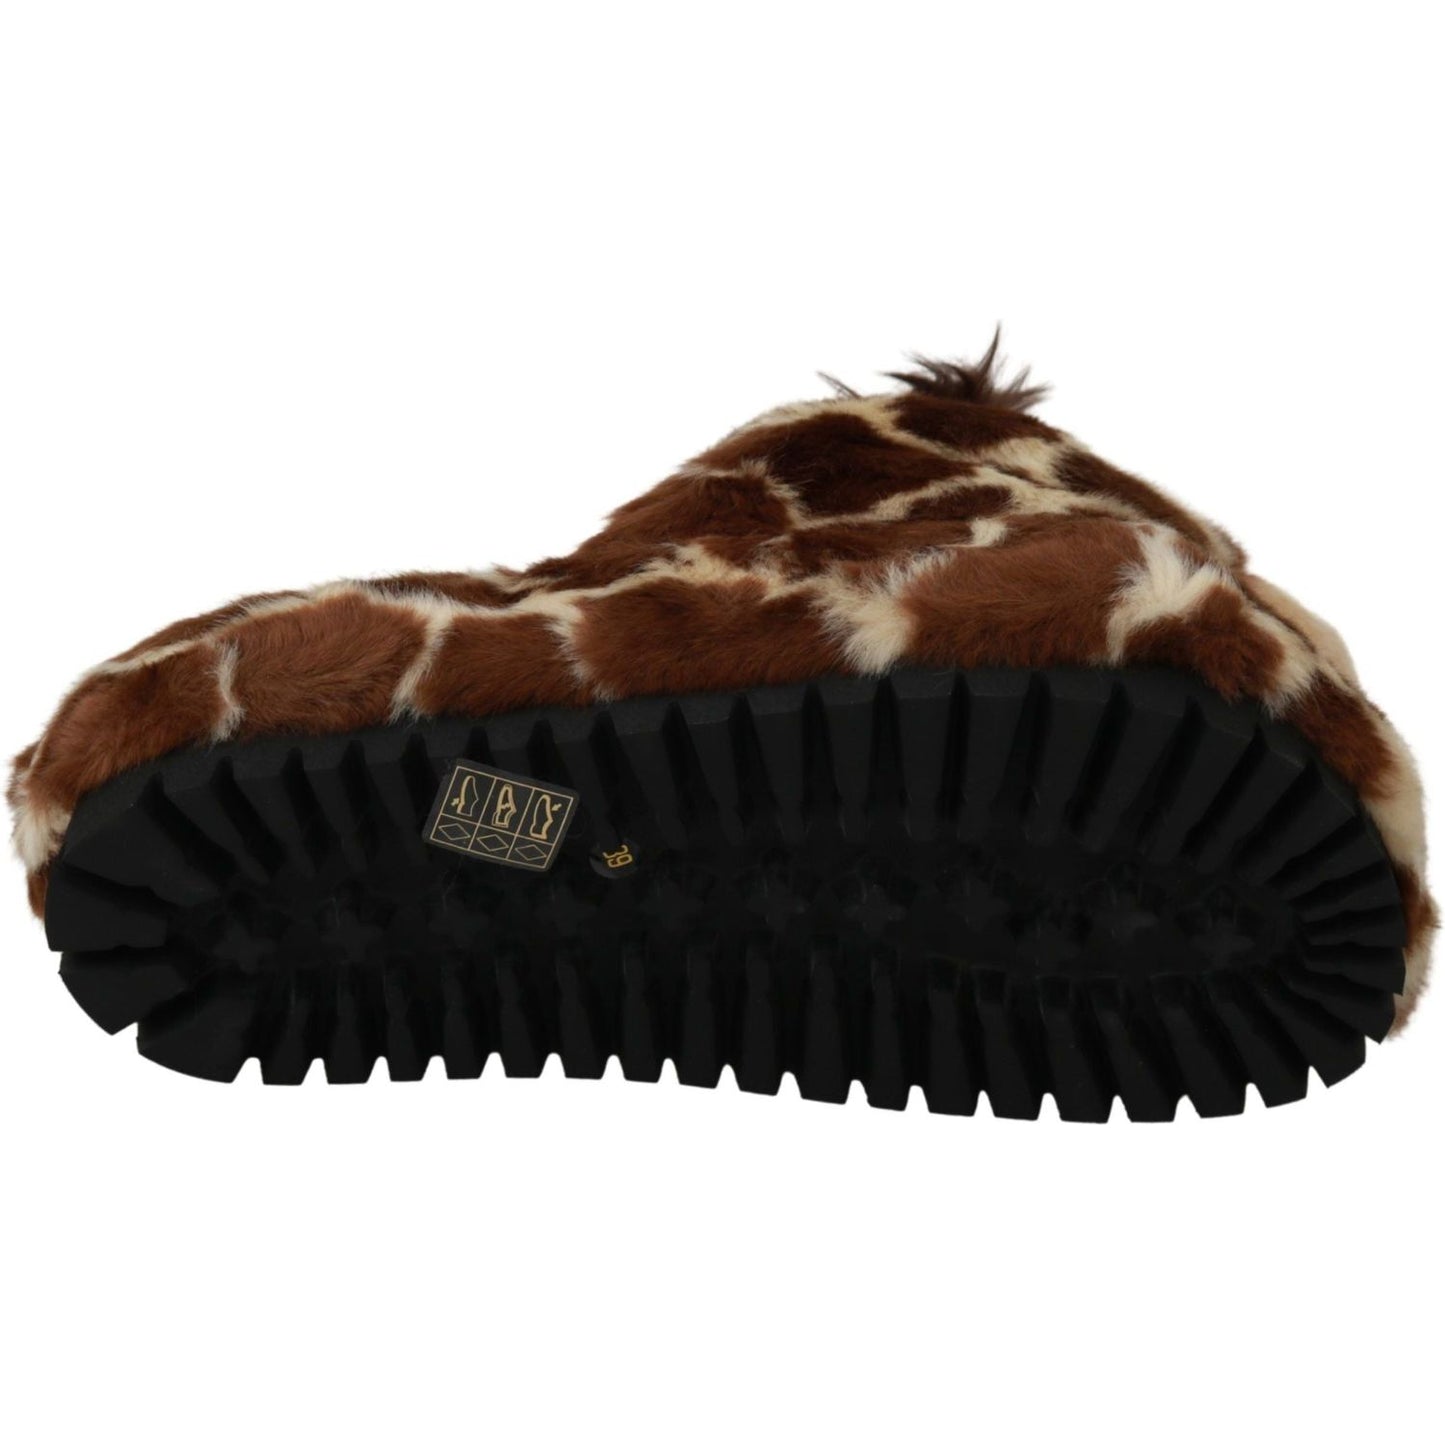 Dolce & Gabbana Elegant Giraffe Pattern Slides for Sophisticated Comfort brown-giraffe-slippers-flats-sandals-shoes IMG_1585-scaled-8b514be4-1af.jpg